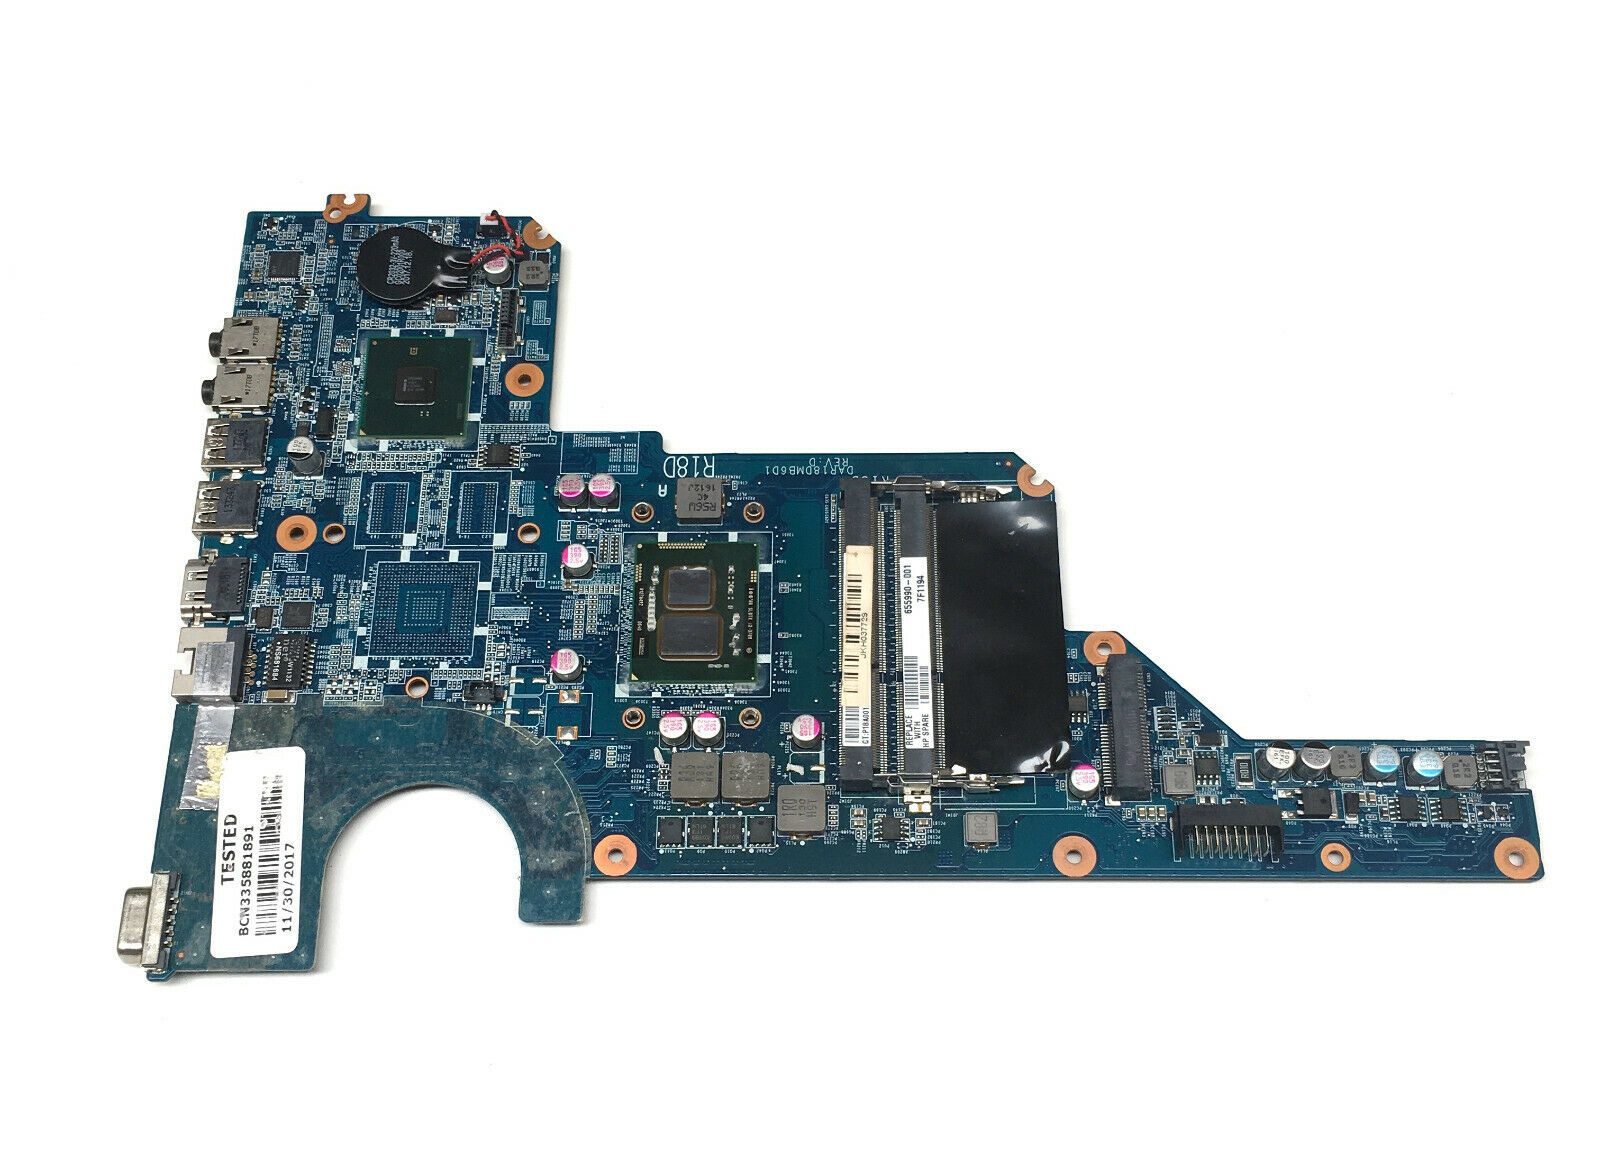 HP PAVILION G6 G6-1000 SERIES i3-370M LAPTOP MOTHERBOARD 655990-001 Compatible CPU Brand: Intel MPN: 655990